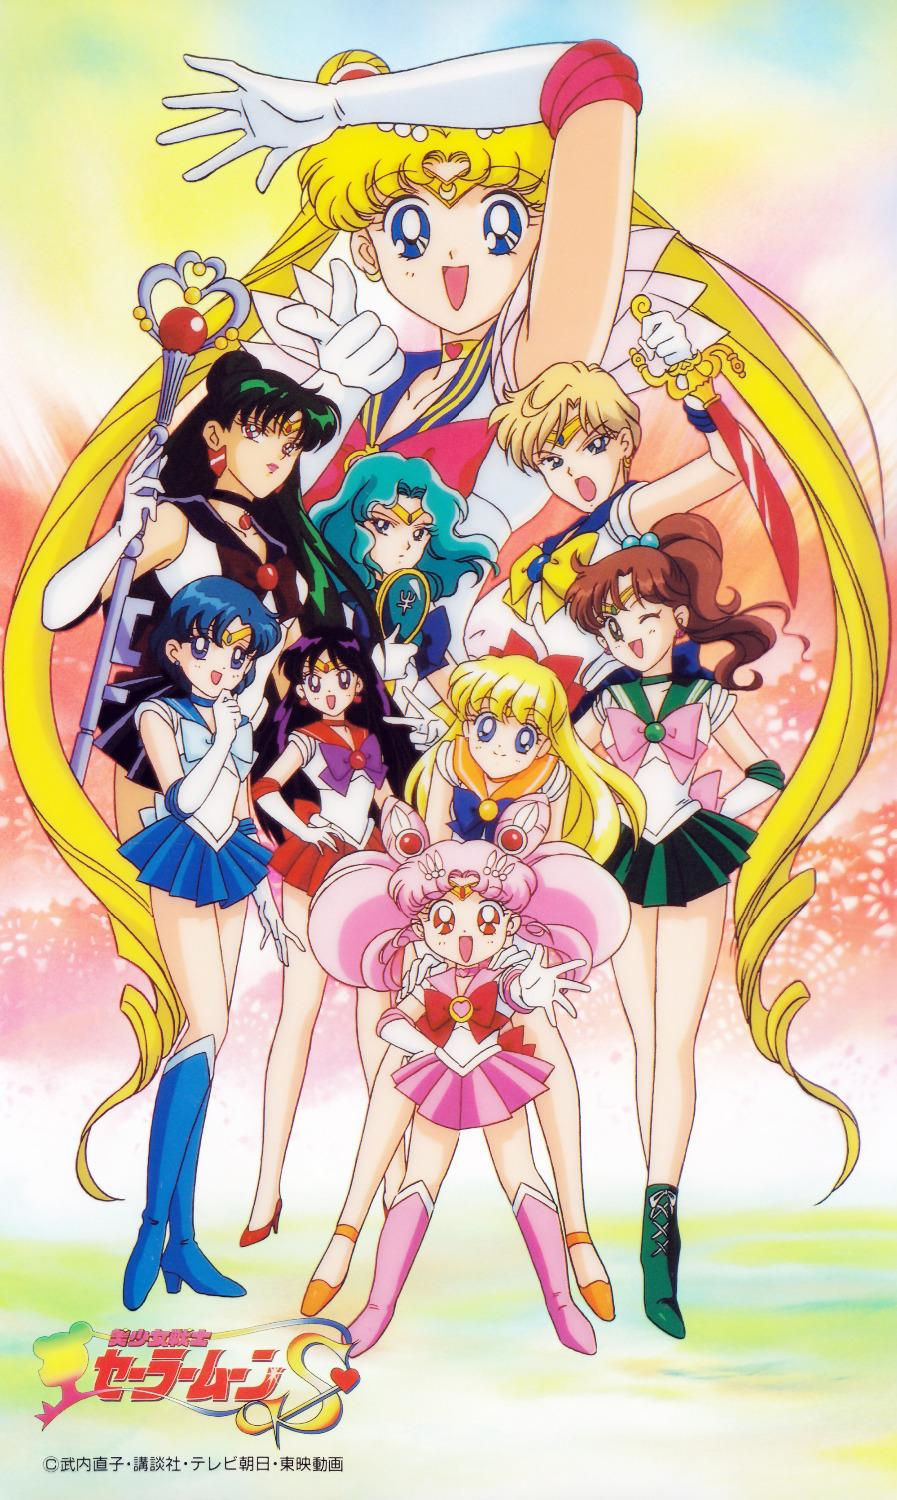 20 Facts About Usagi Tsukino/Sailor Moon (Sailor Moon) 